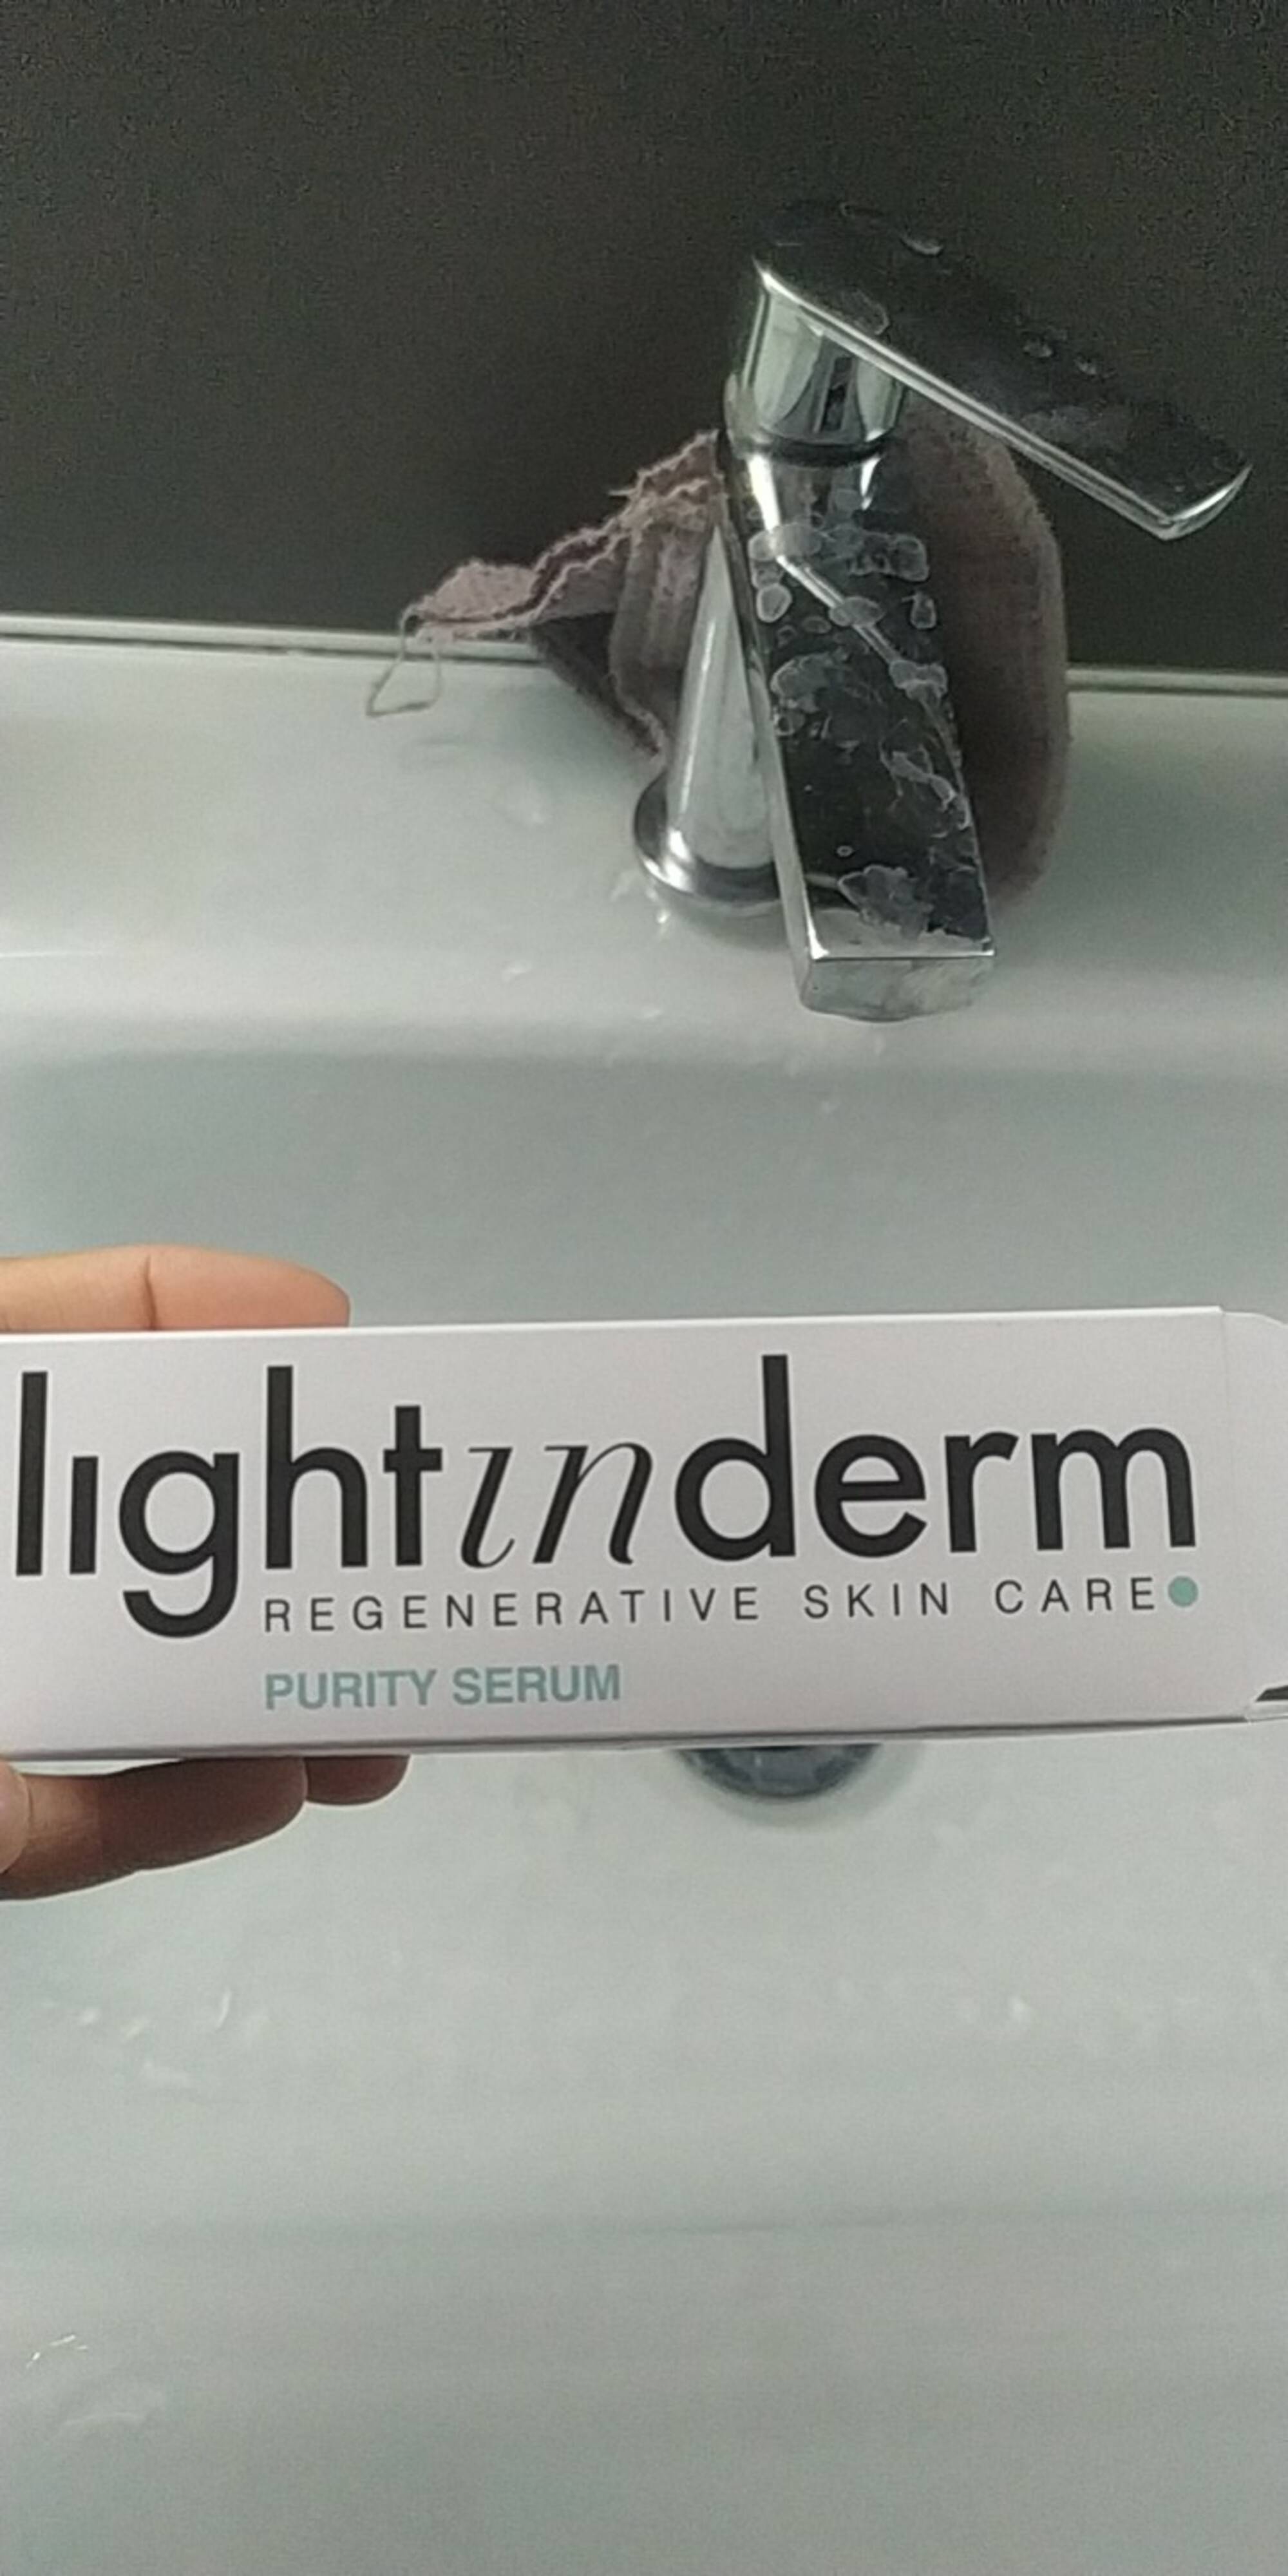 LIGHTINDERM - Regenerative skin care - Purity serum